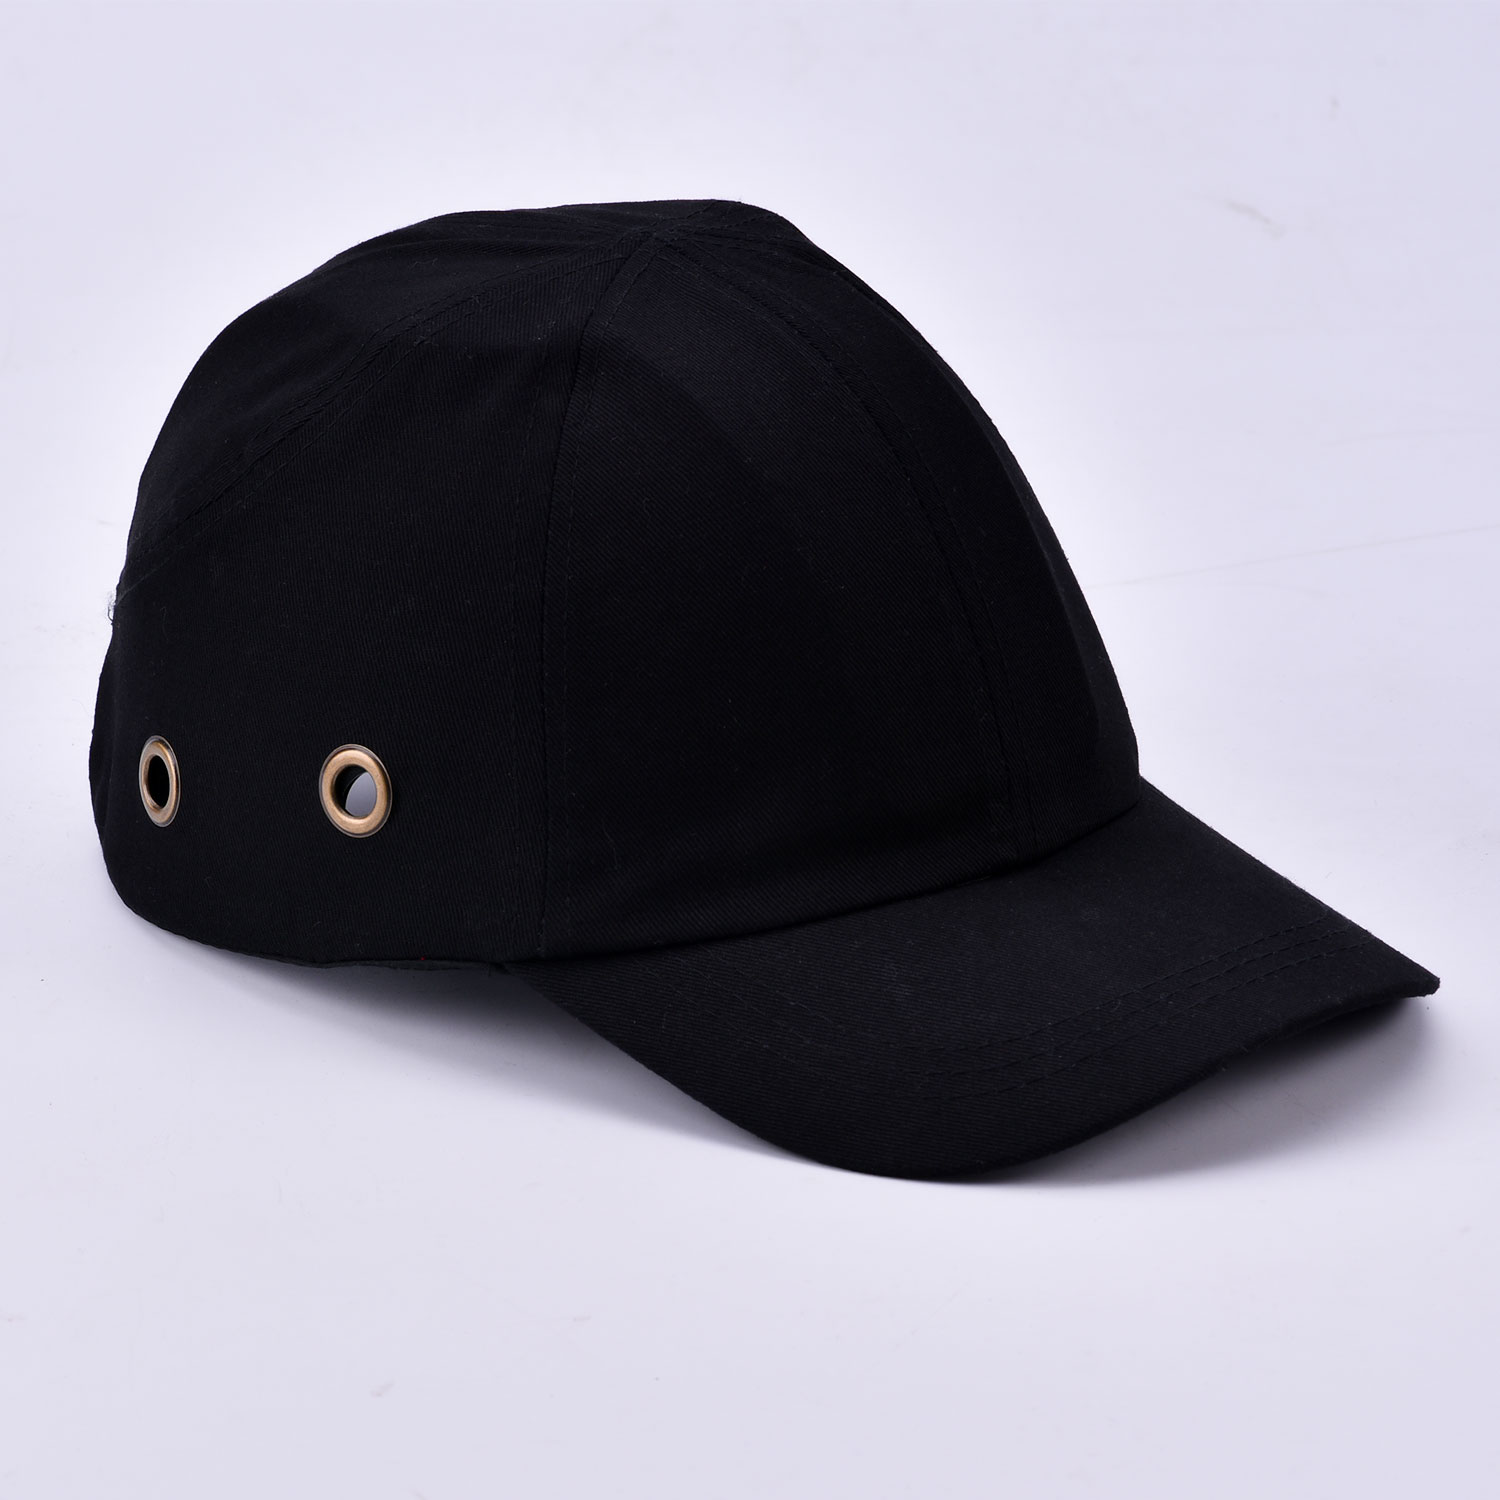 Бейсбольная защитная кепка WH001 Black